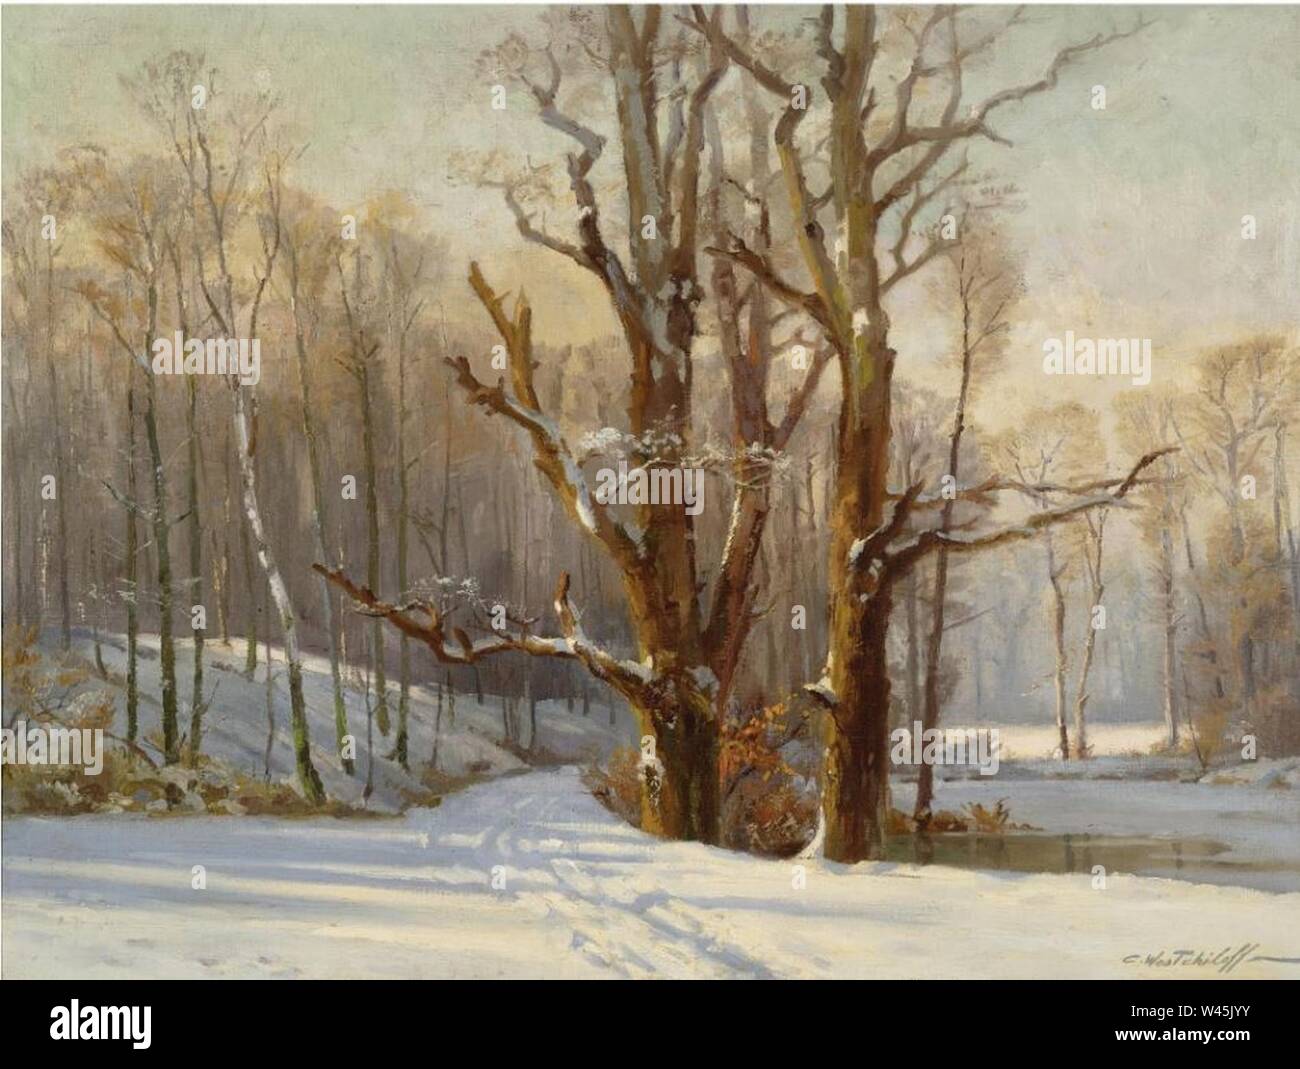 Constantin Westchiloff - The Woods in Winter. Stock Photo